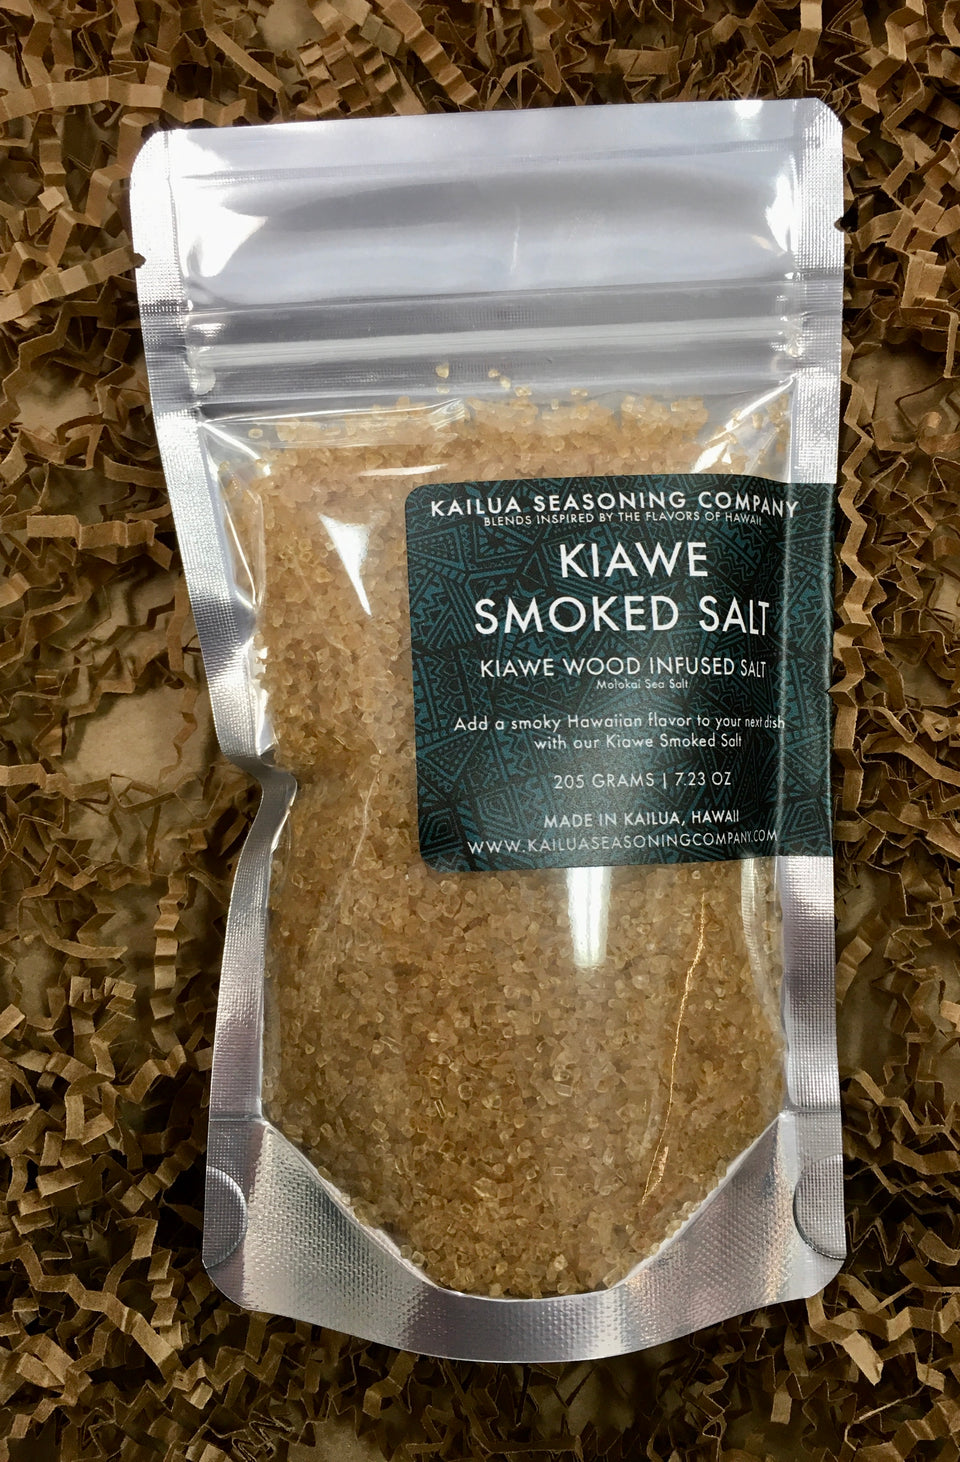 close up of Kiawe smoked salt package